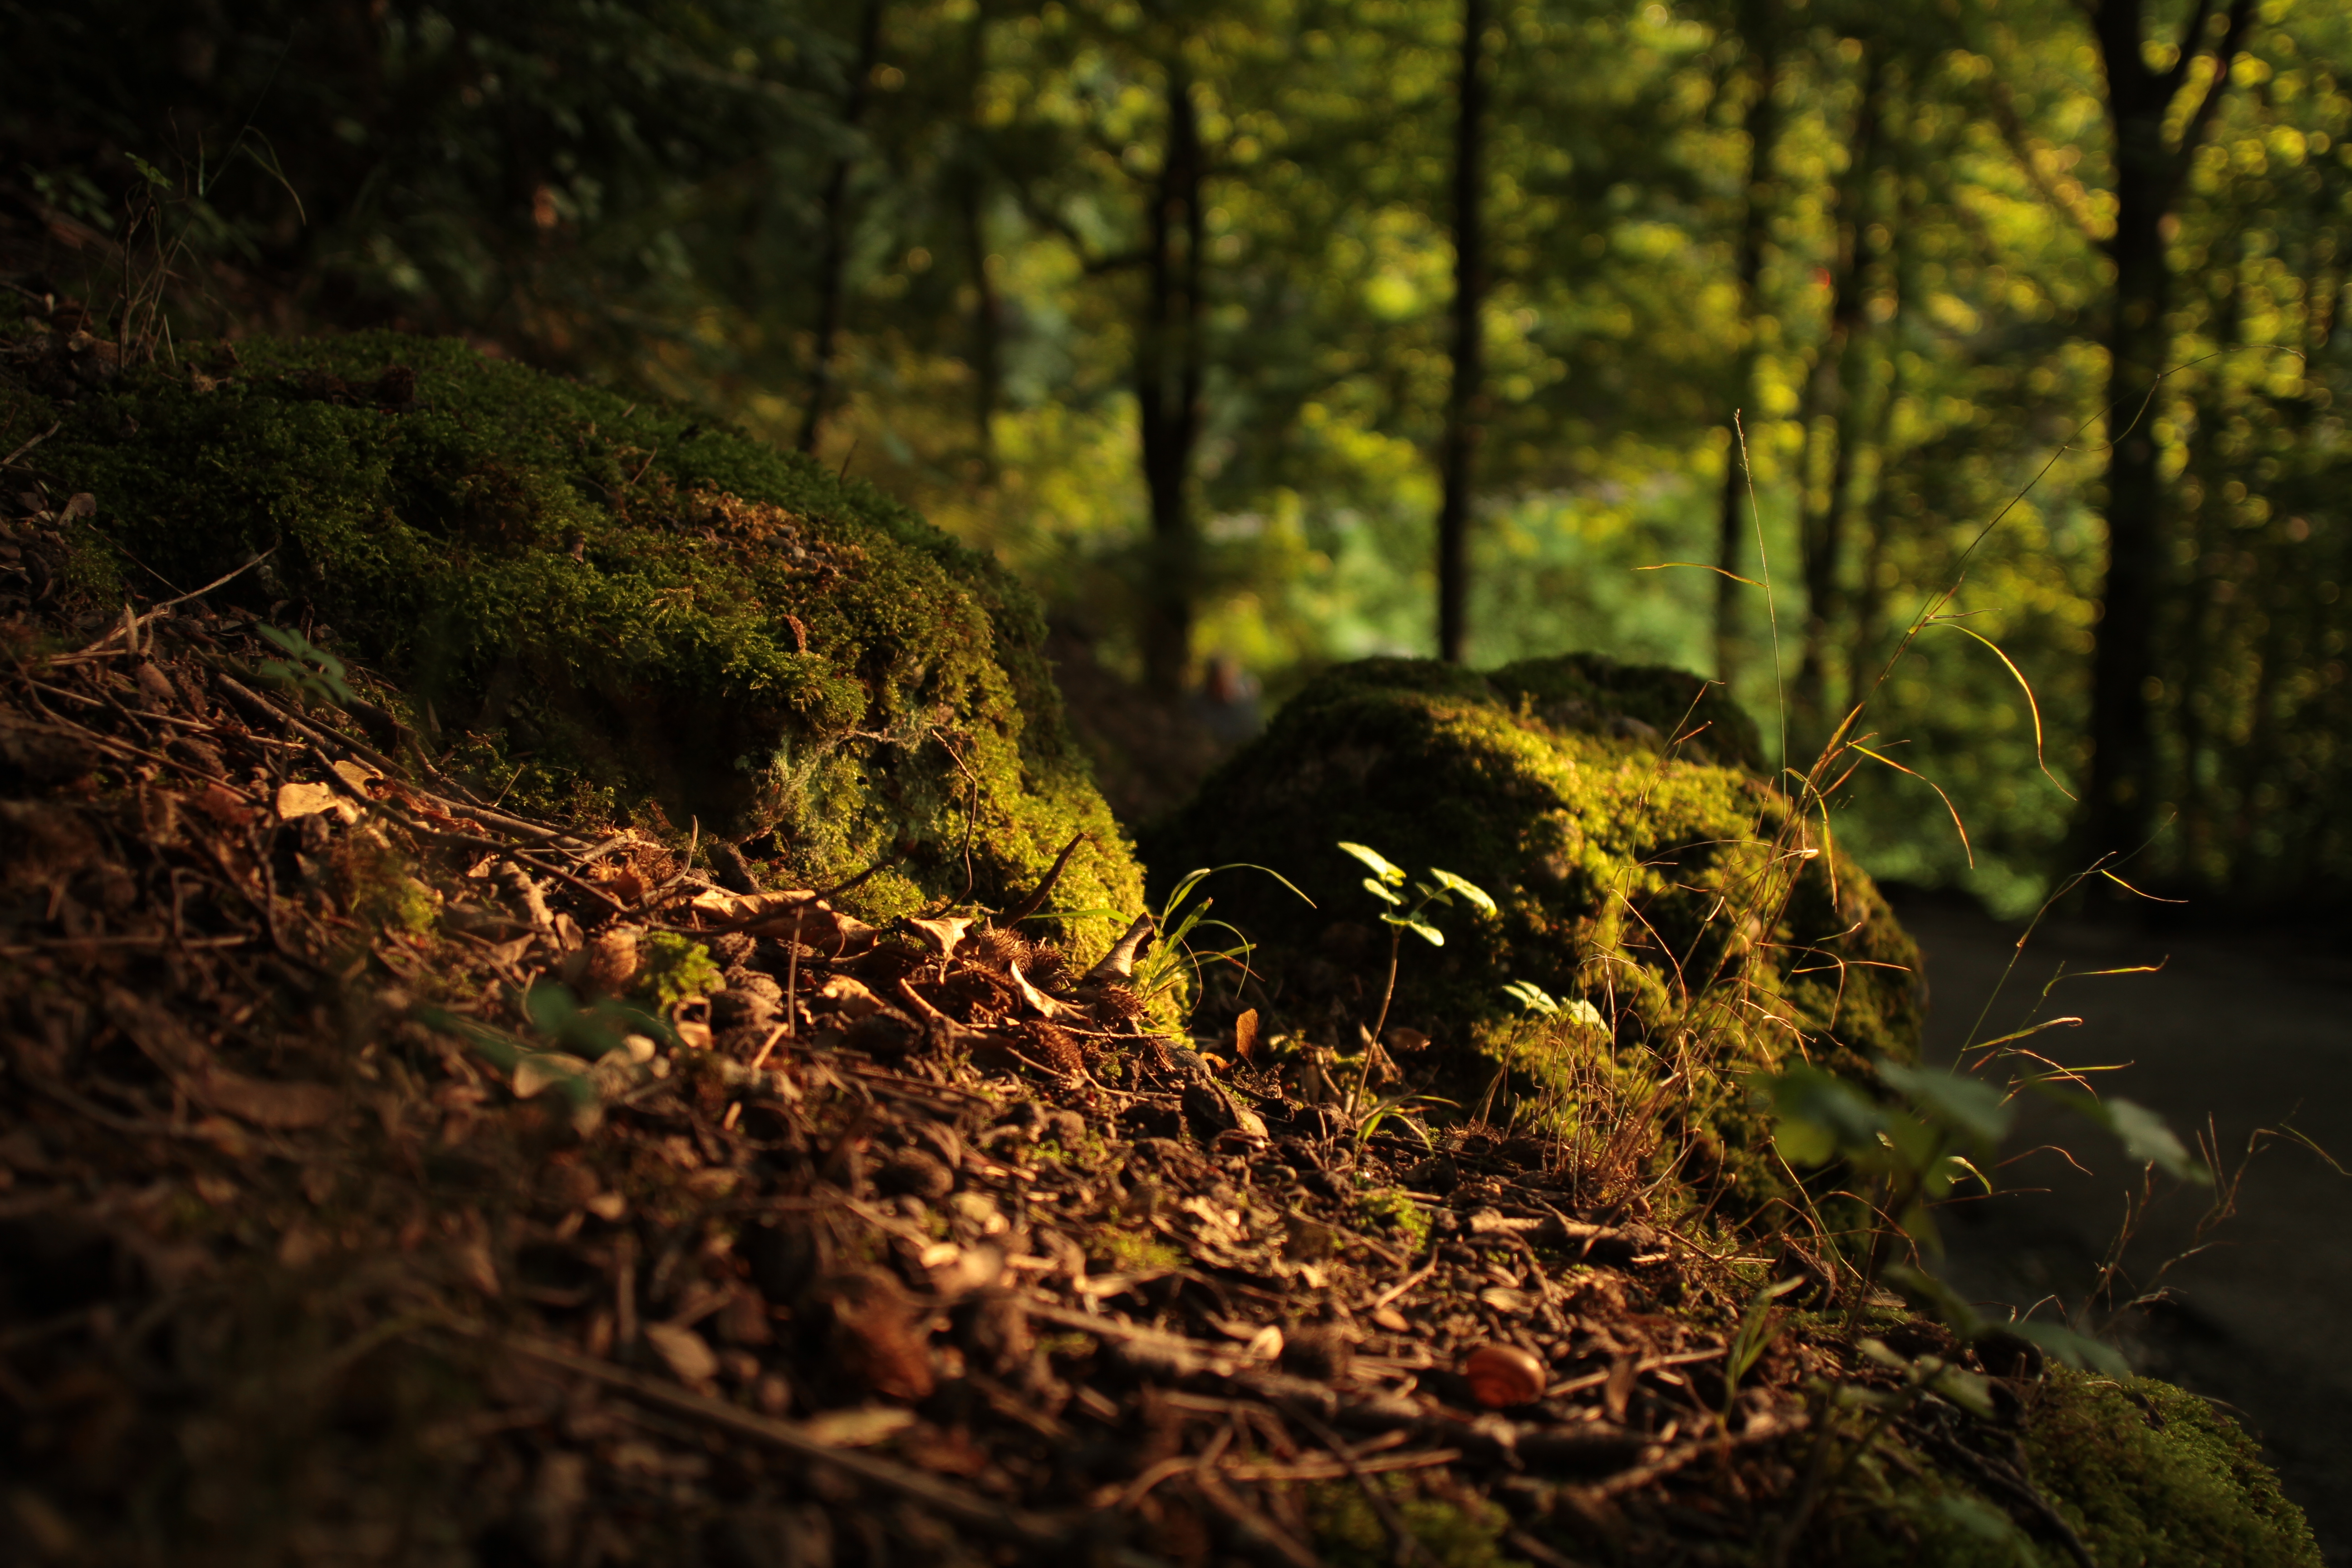  woods-photography-matthias-grunsky 